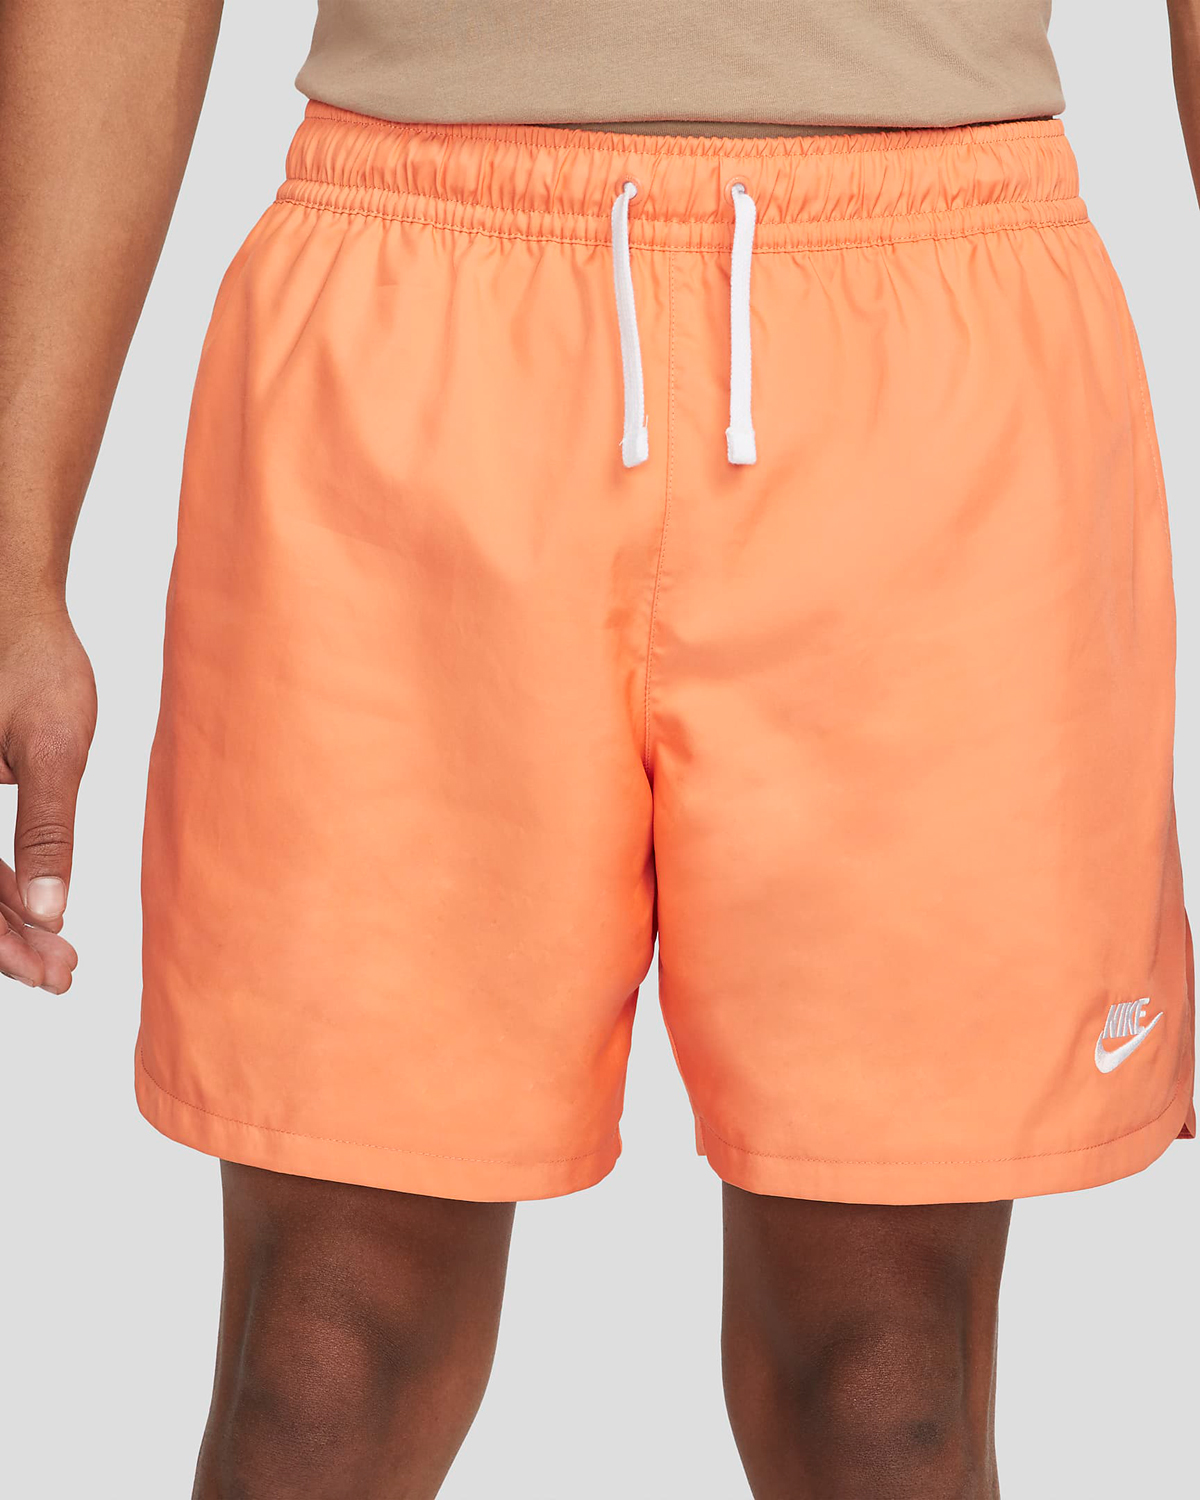 Nike-Woven-Flow-Shorts-Orange-Trance